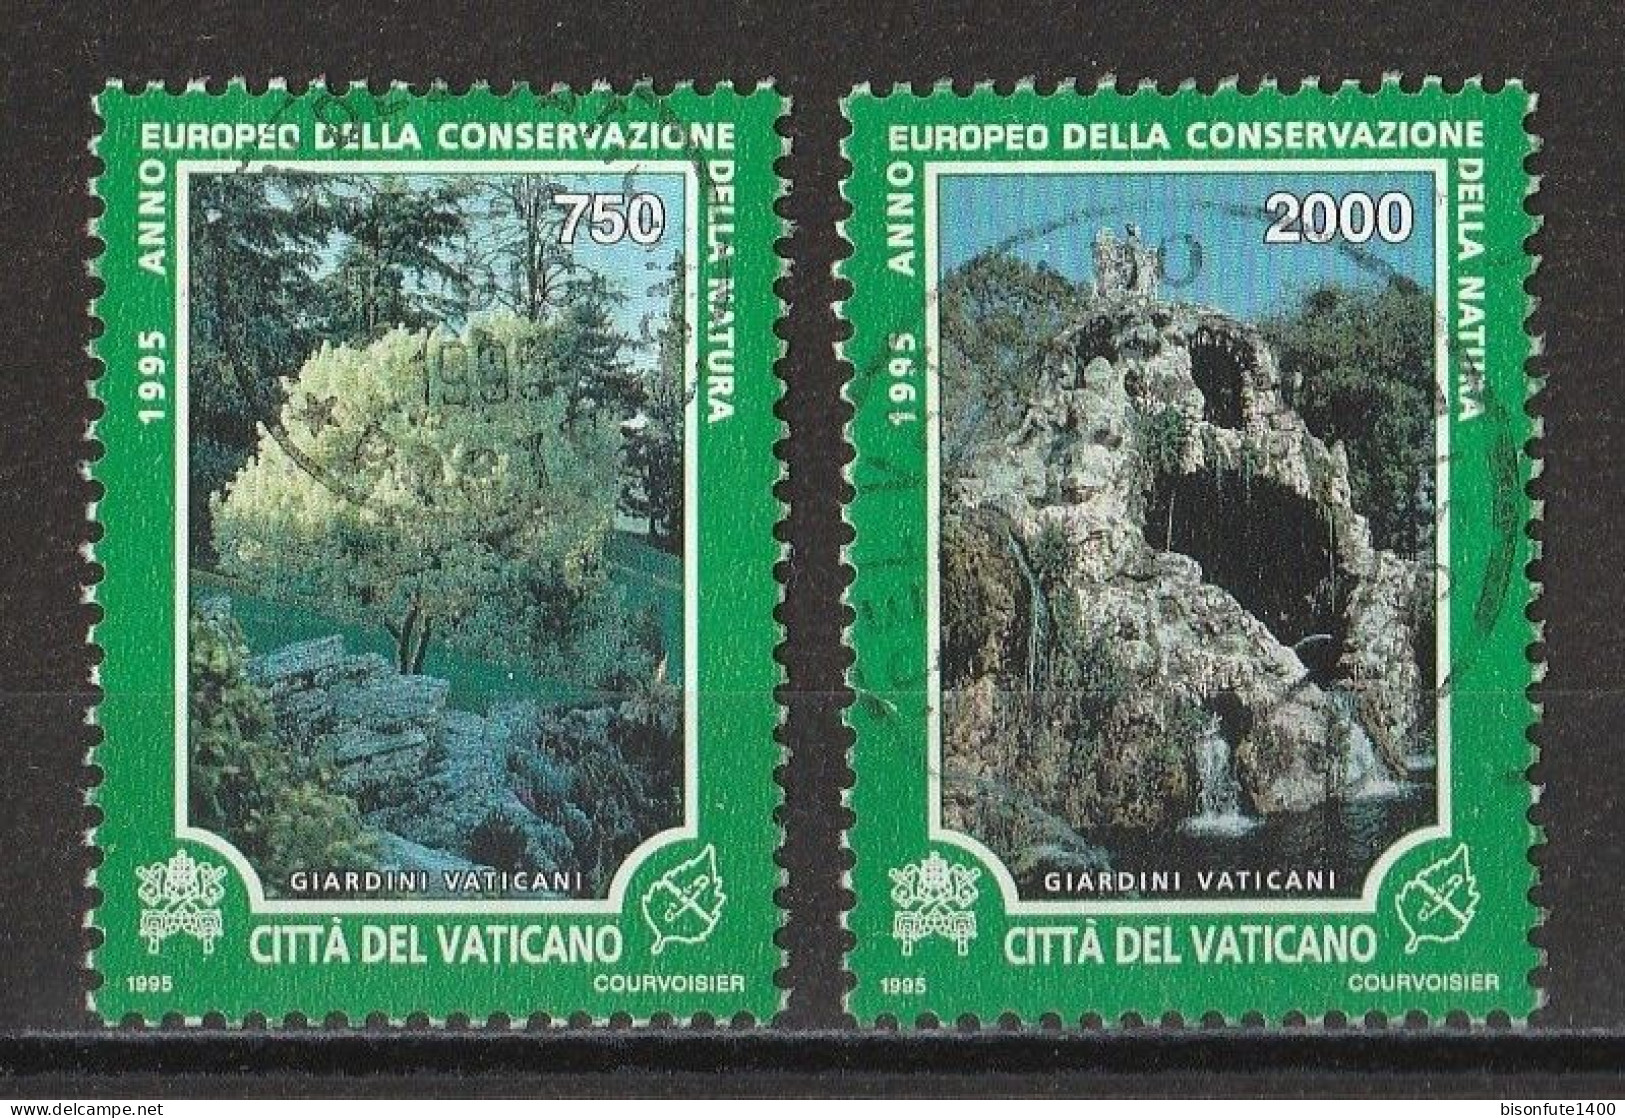 Vatican 1995 : Timbres Yvert & Tellier N° 998 - 999 - 1007 - 1008 - 1009 - 1011 Et 1013 Oblitérés - Used Stamps